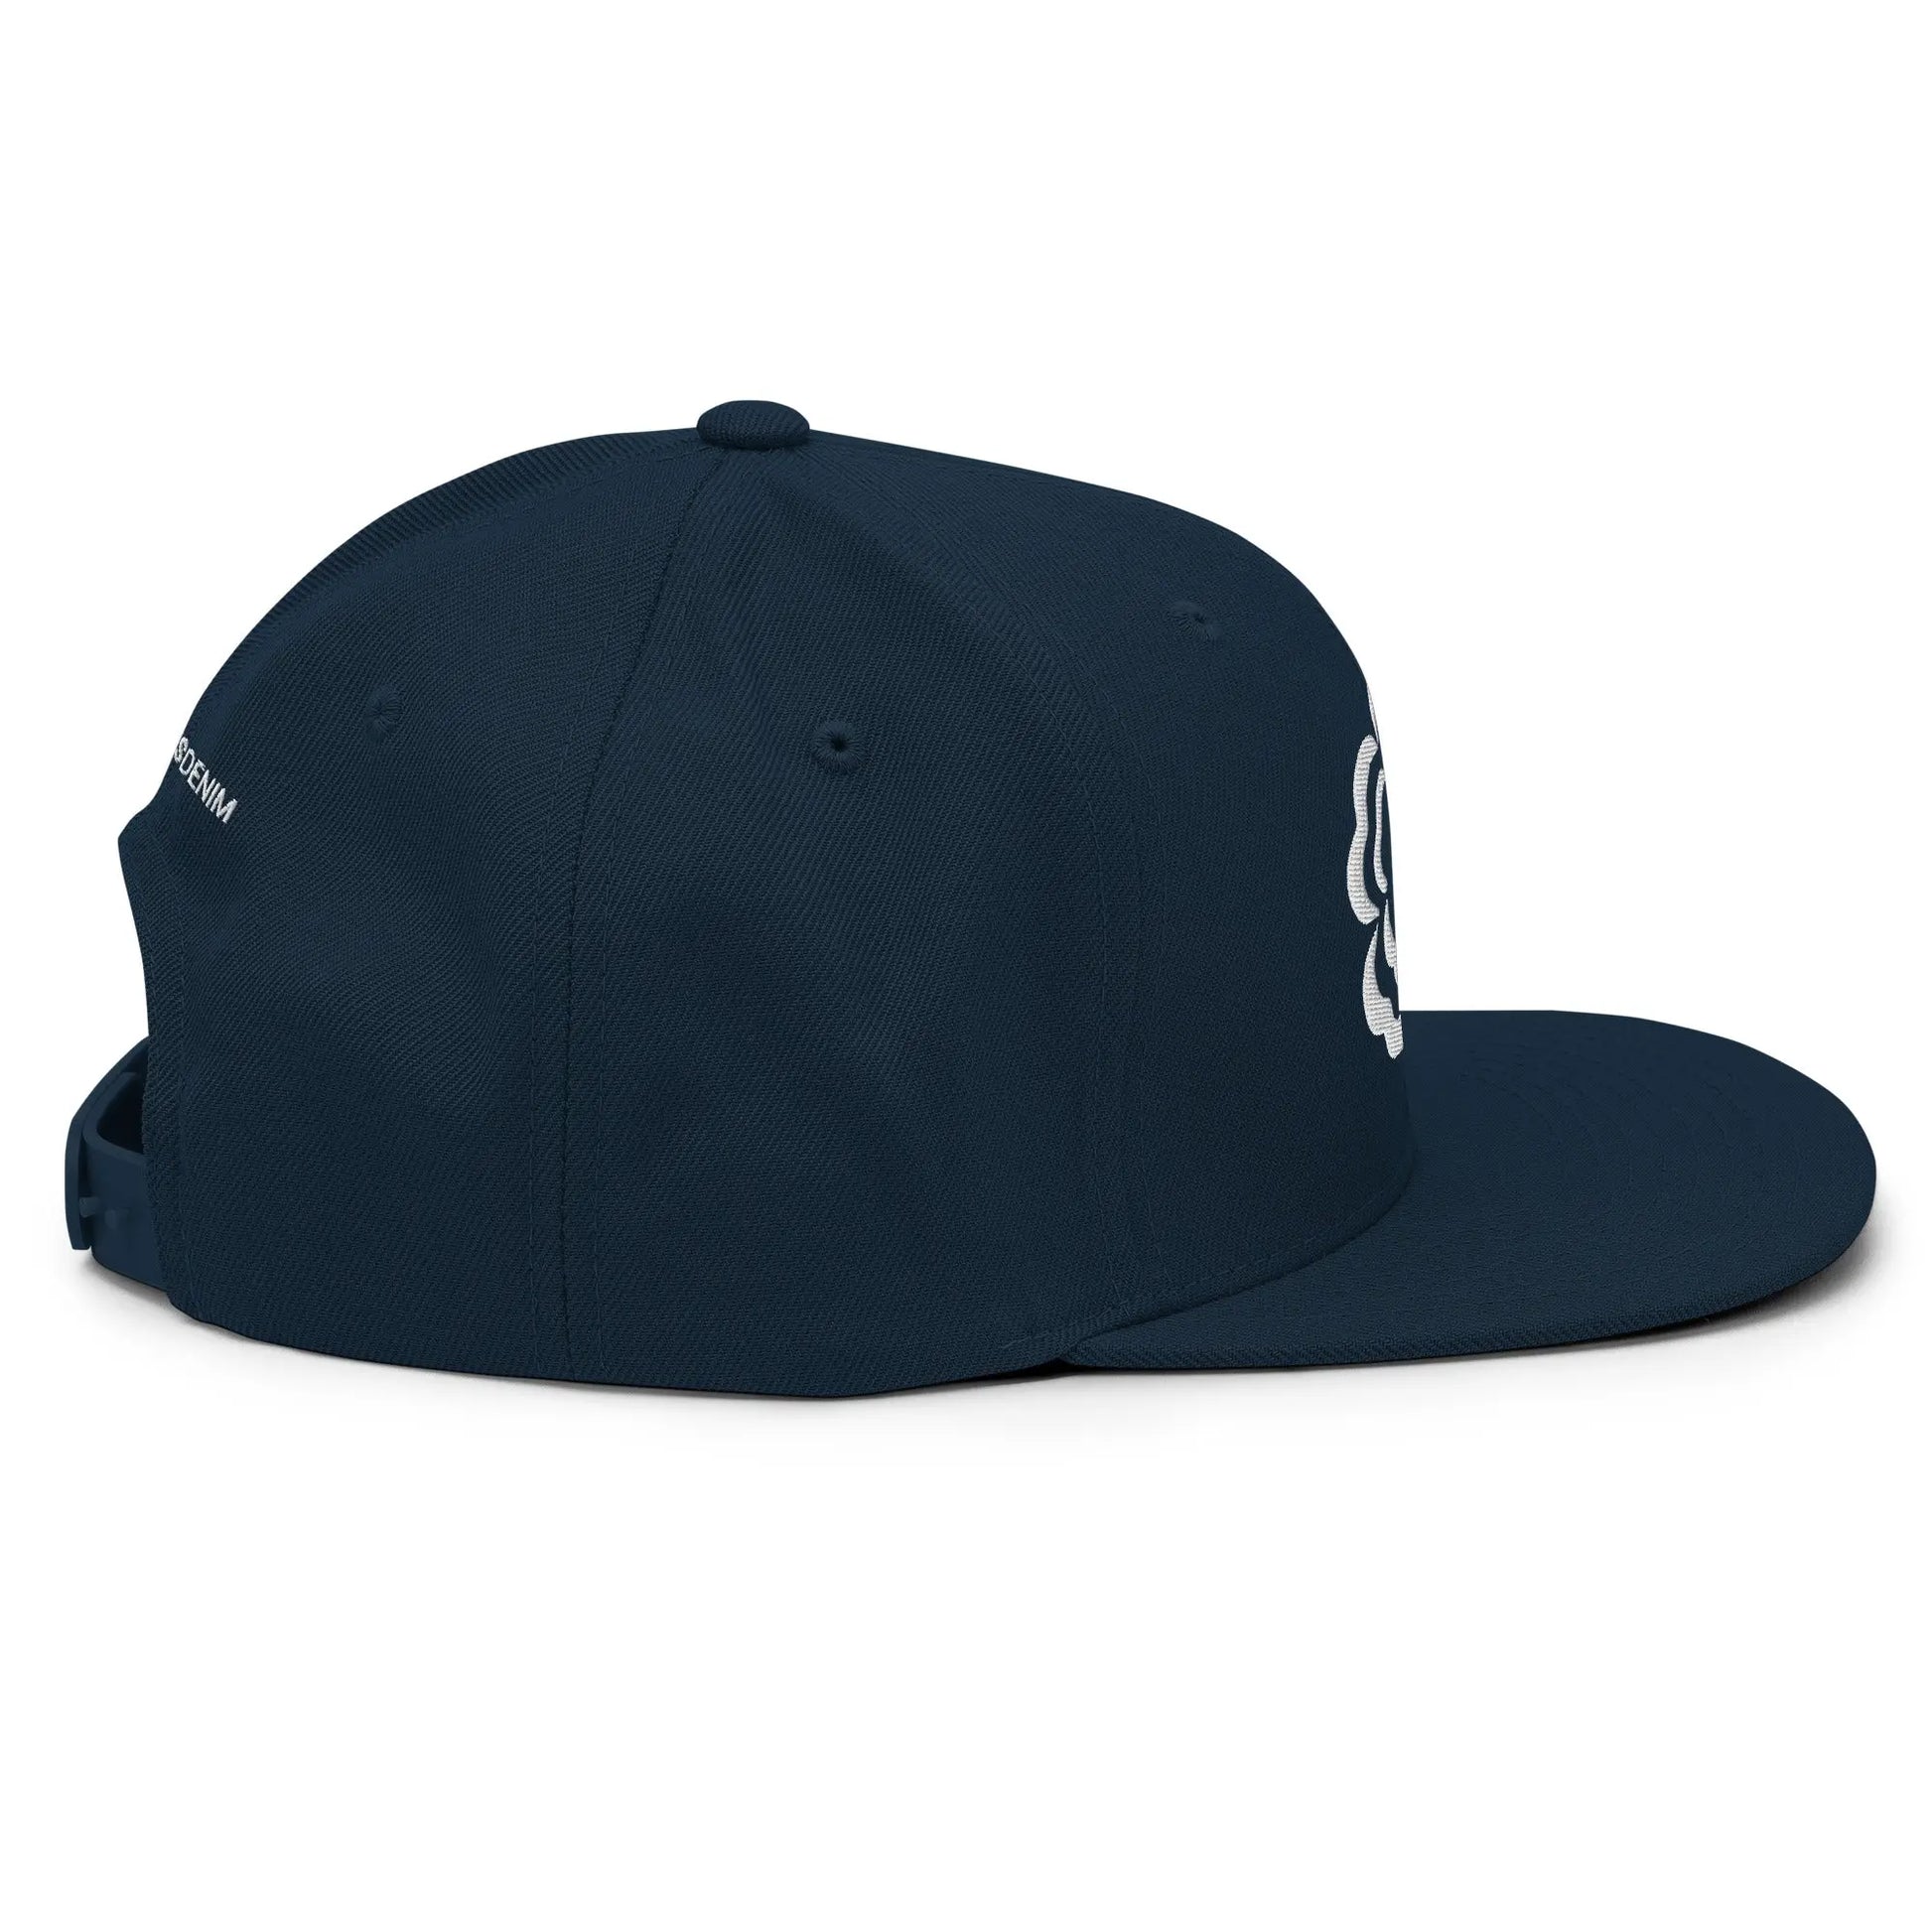 Hominus Denim OG Cap Snapback Hat Hominus Denim